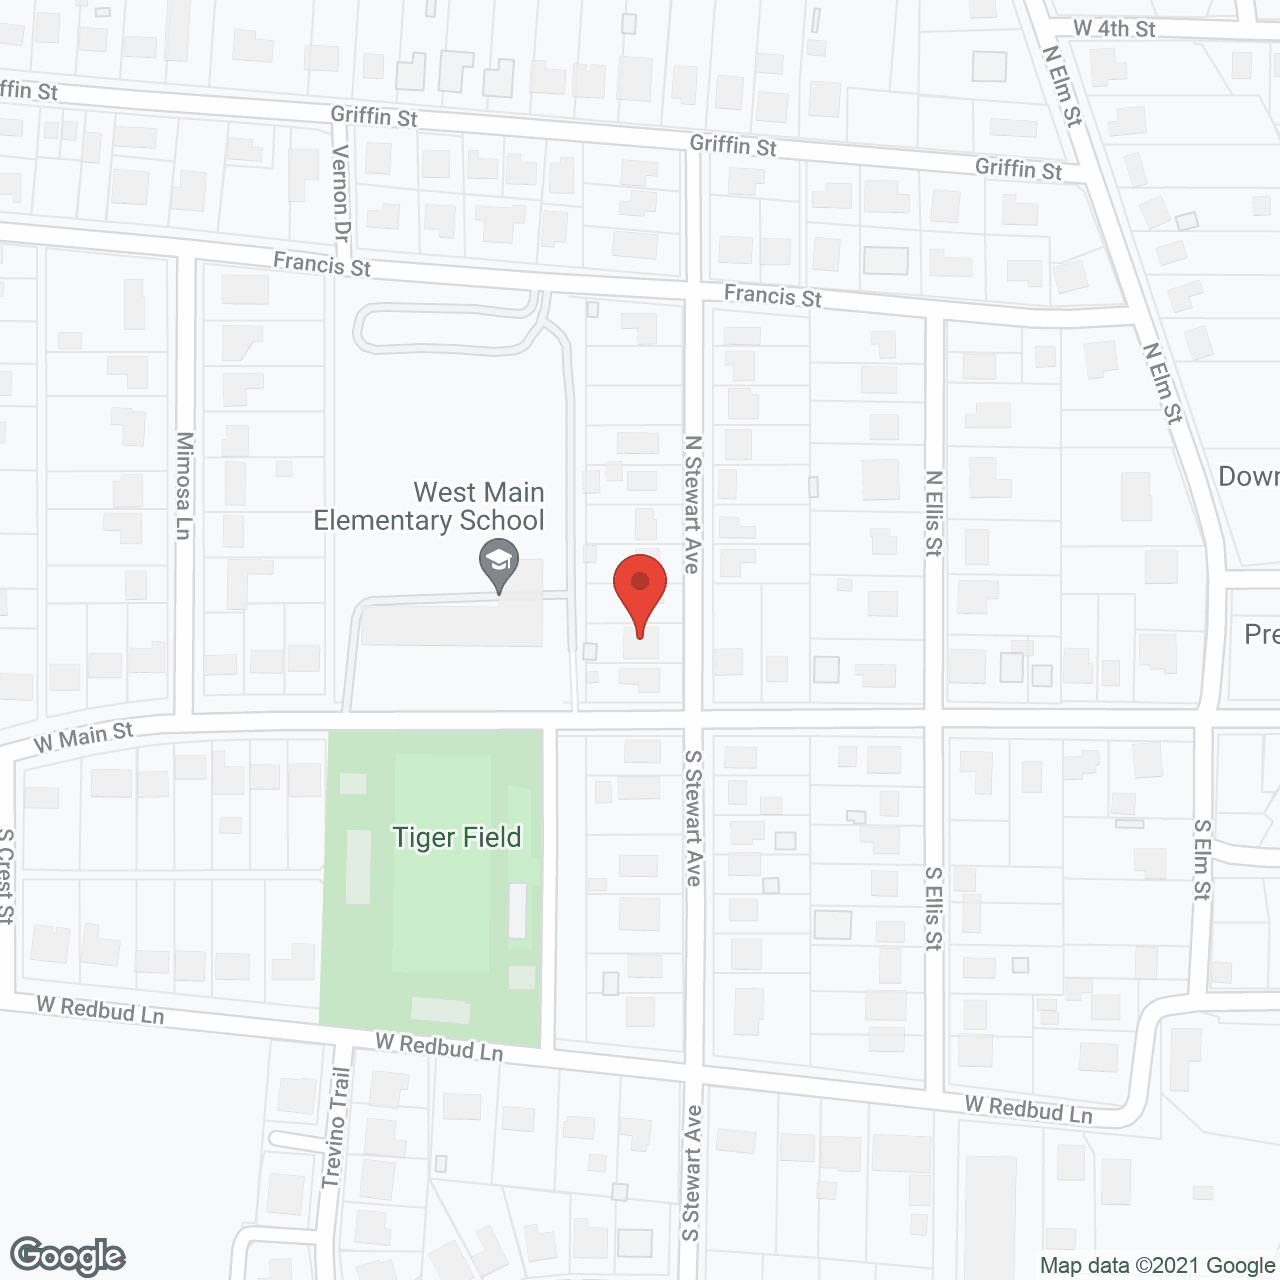 Brixton Village for the Elderly in google map